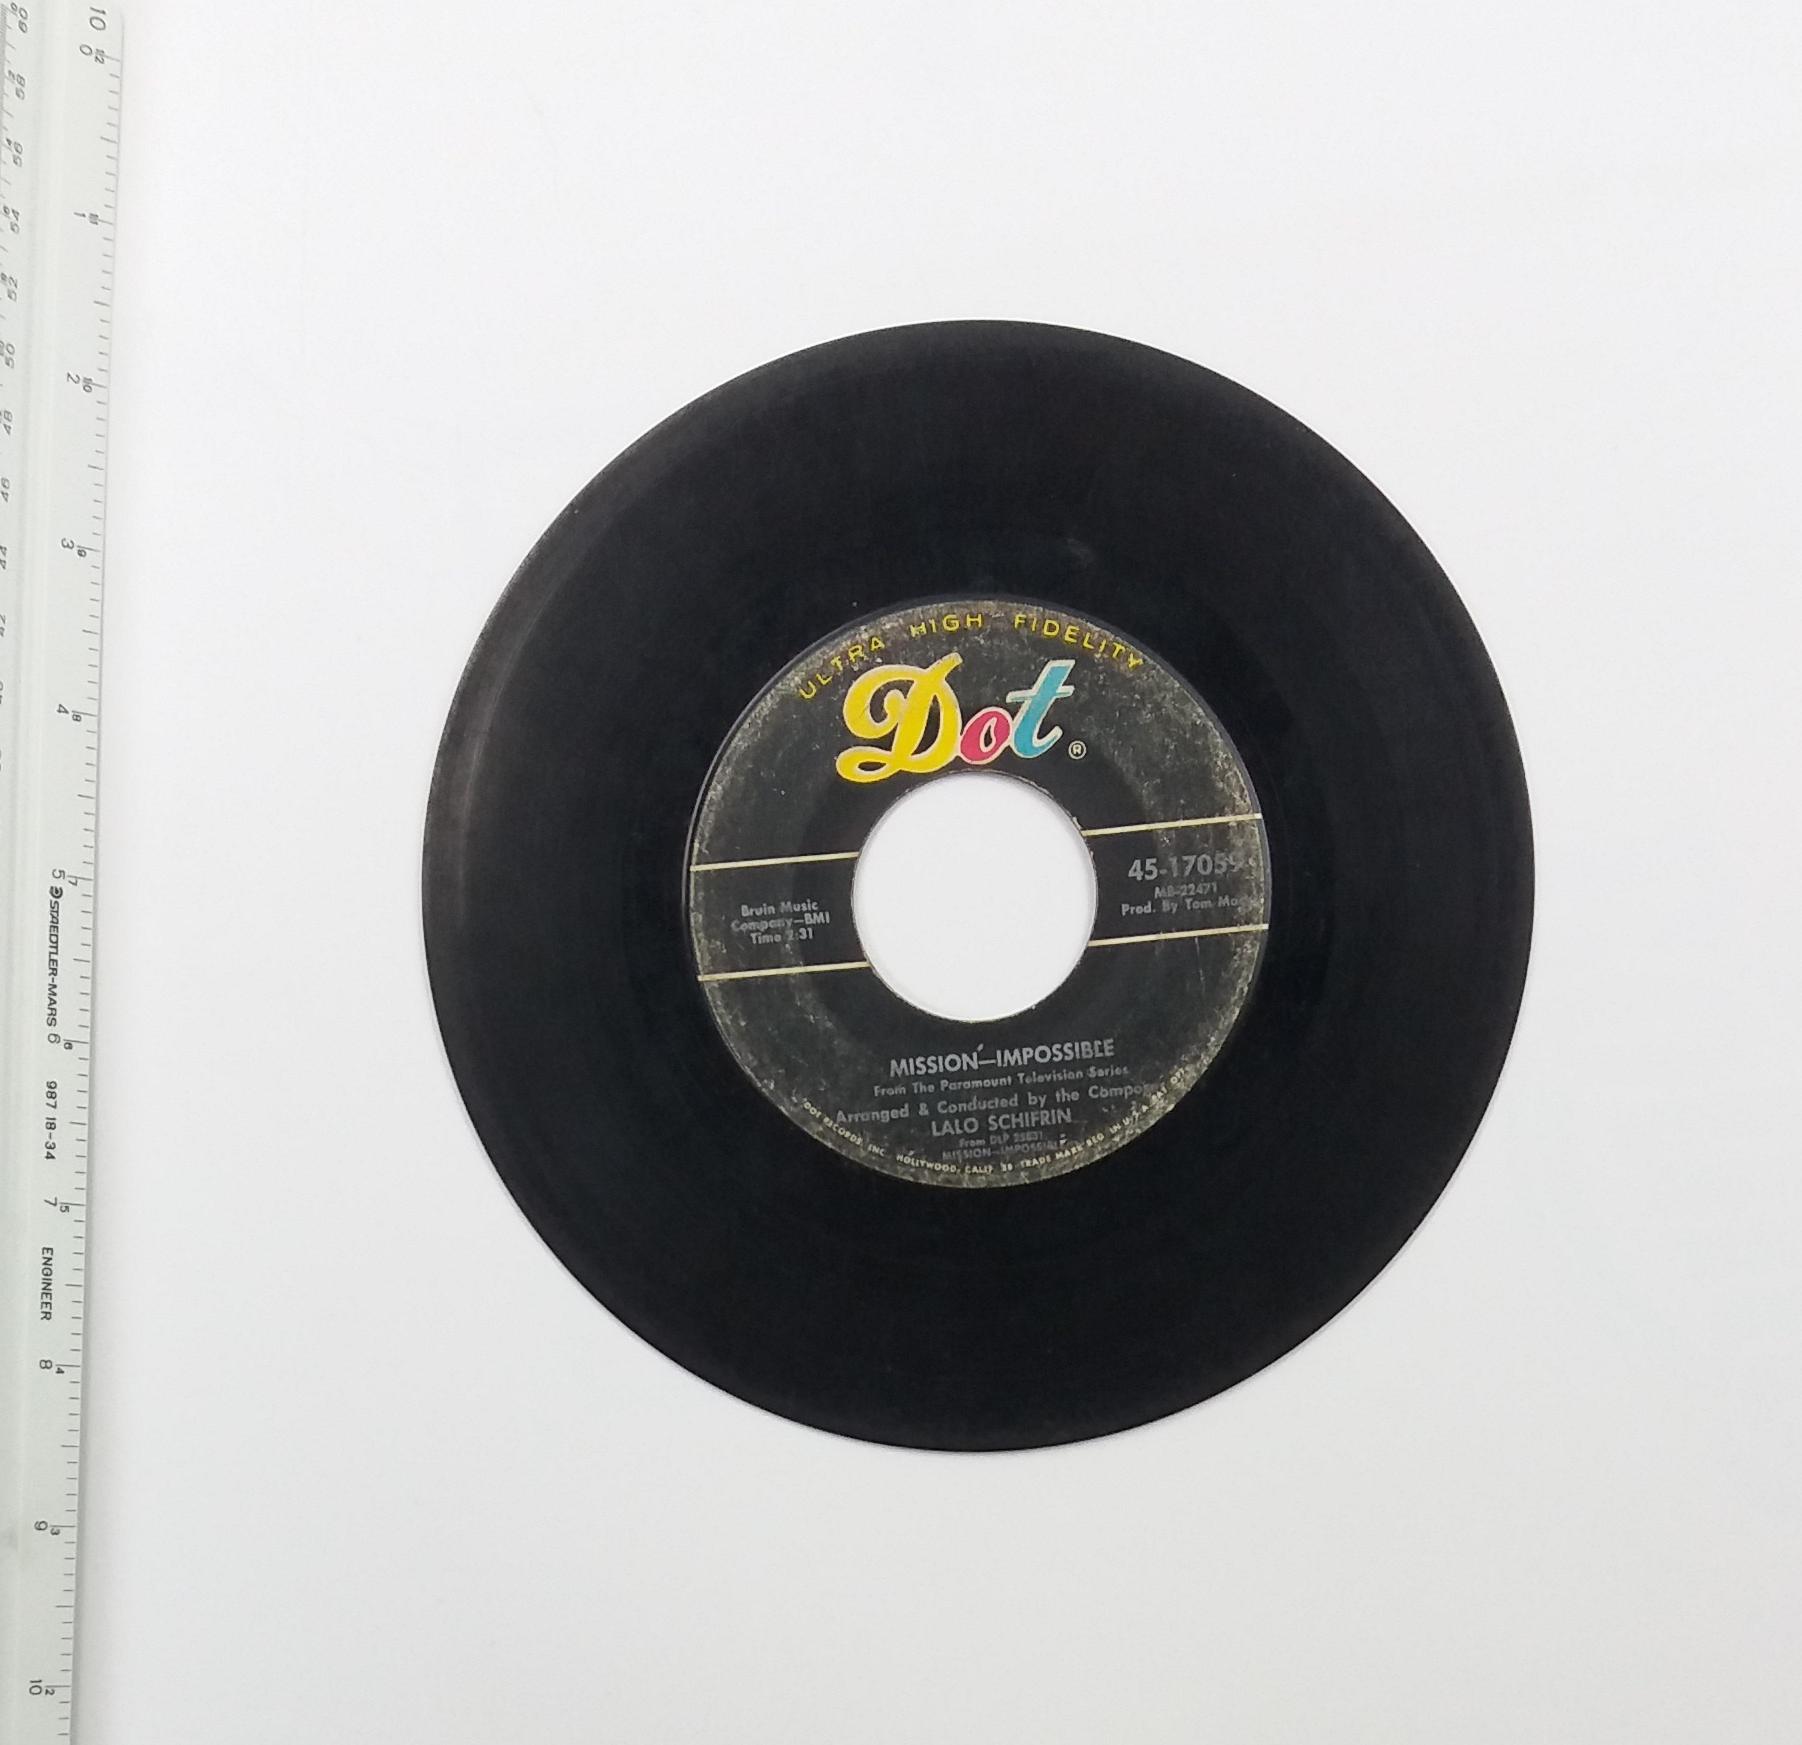 Lalo Schifrin "Mission Impossible Theme" 45 RPM Dot Vinyl Record